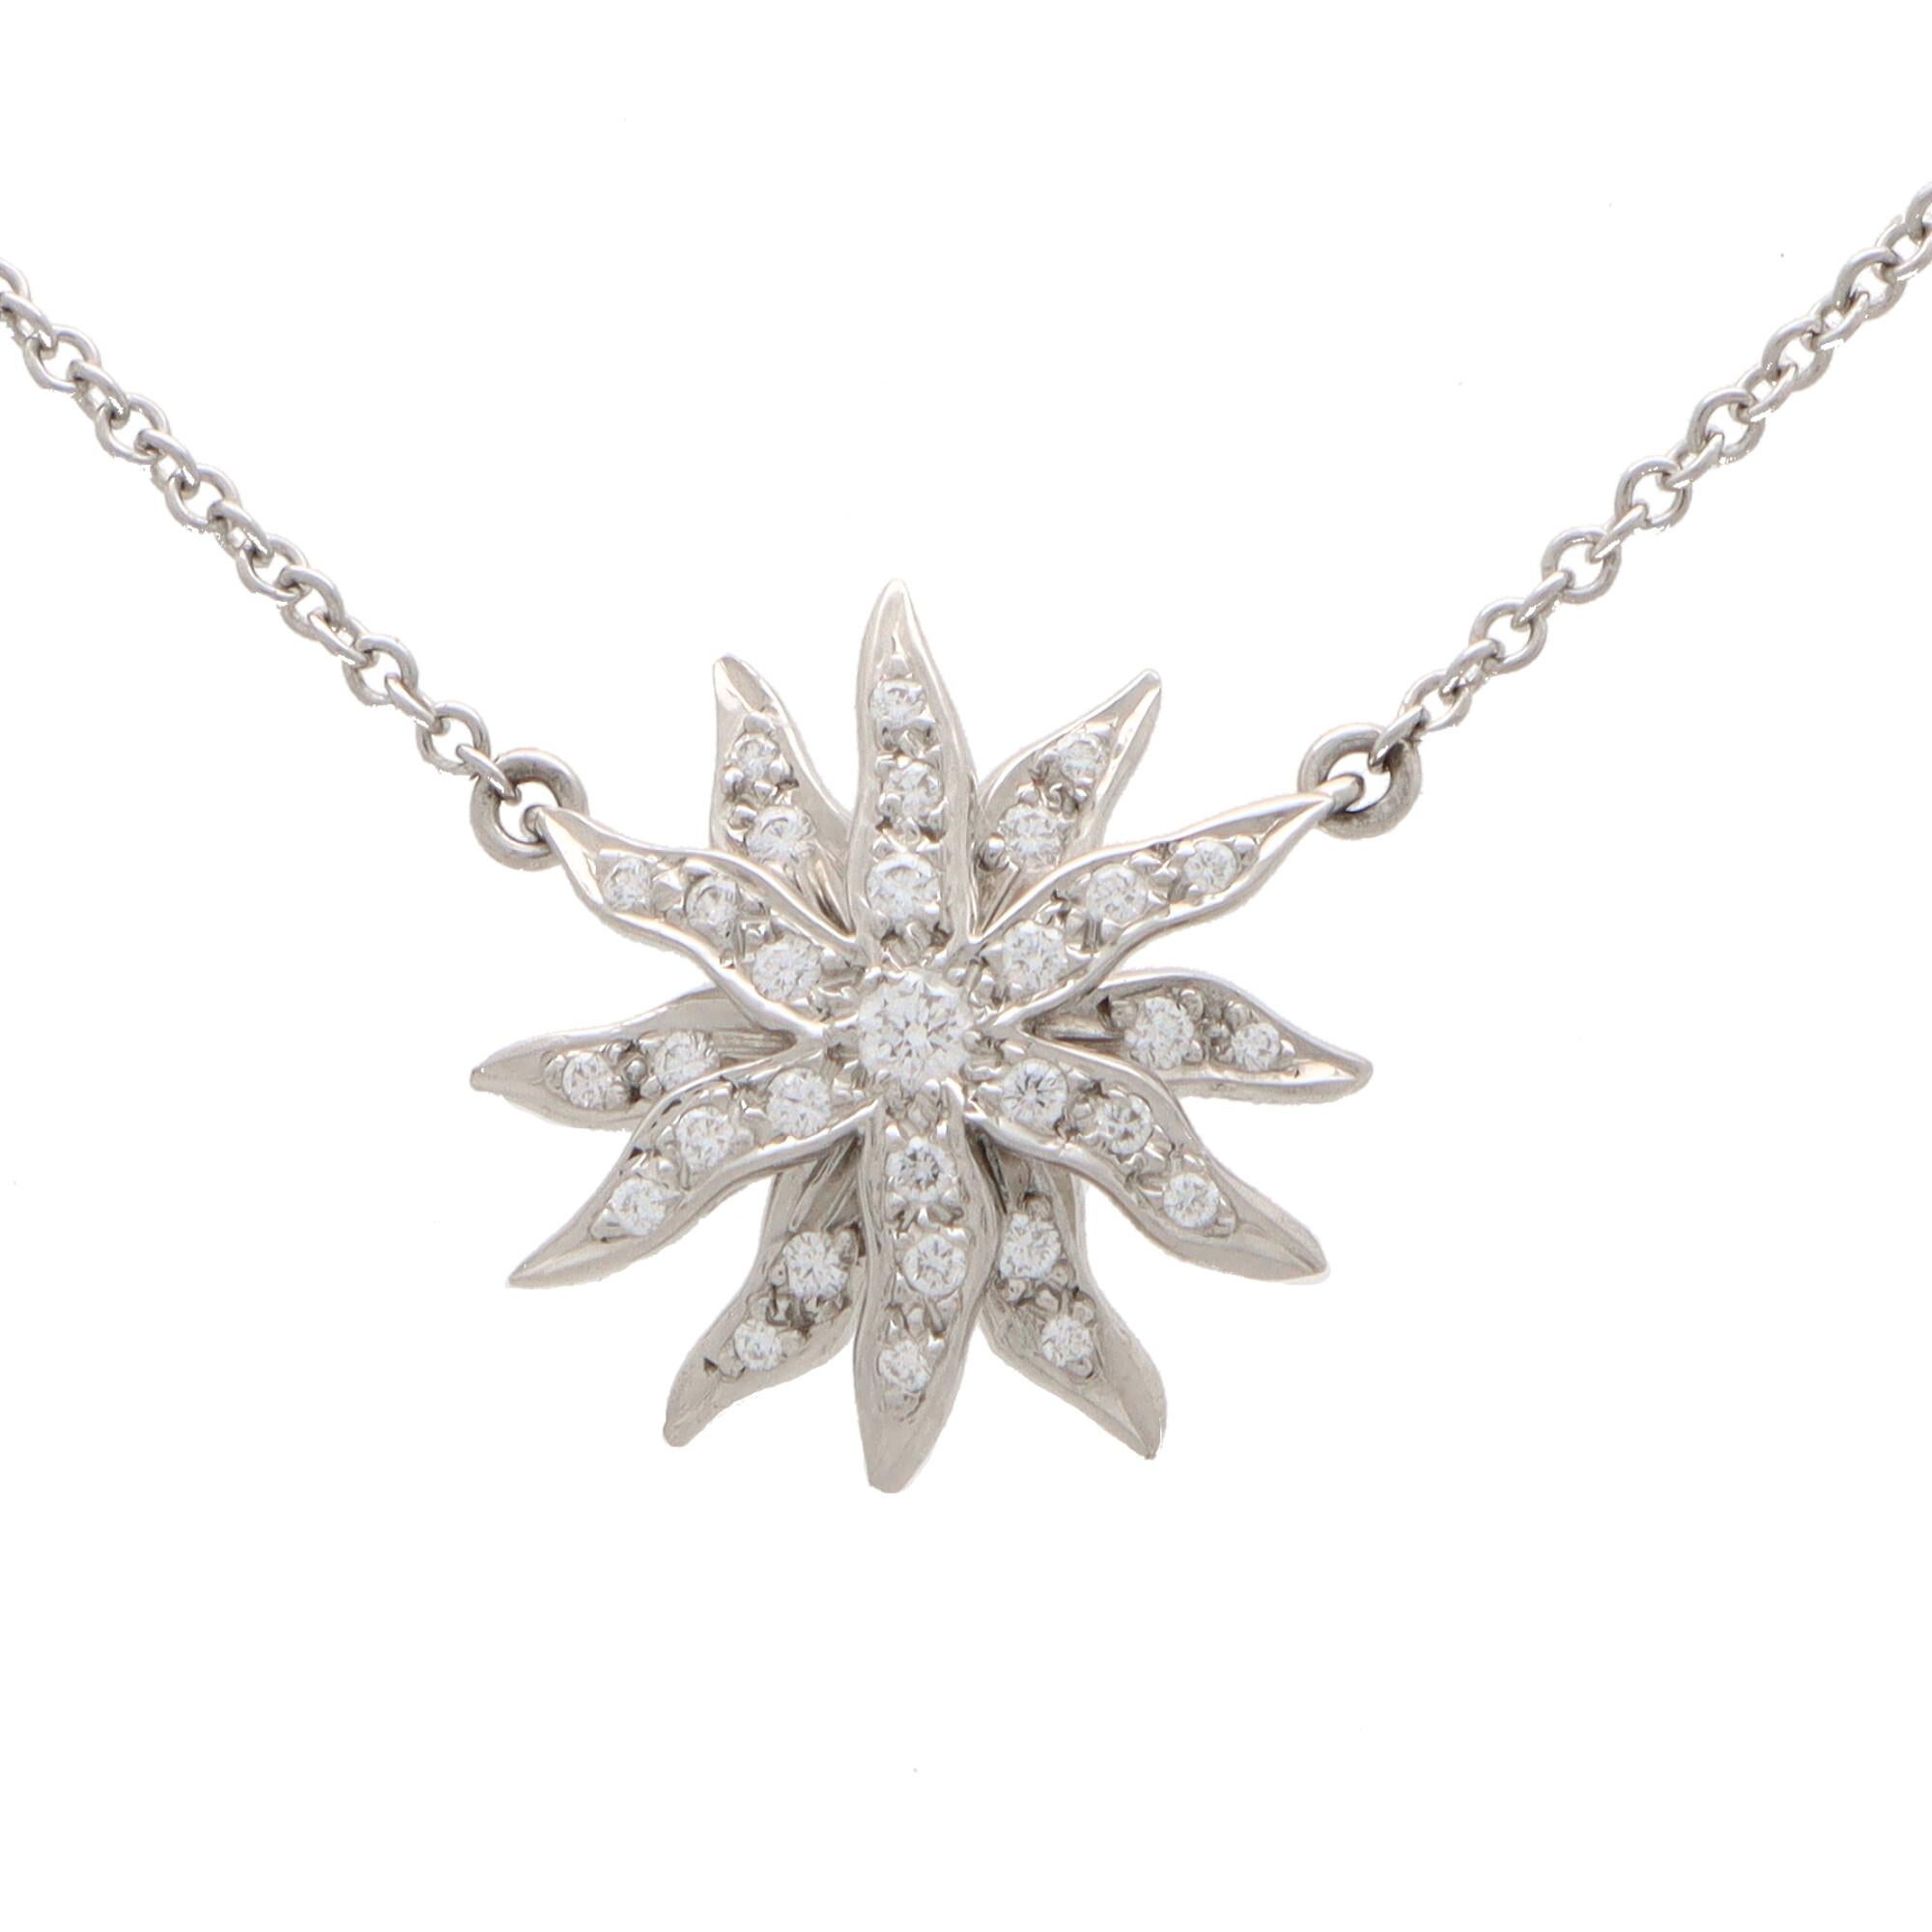 Modern Vintage Tiffany & Co. ‘Lace Sunburst’ Diamond Pendant Necklace Set in Platinum